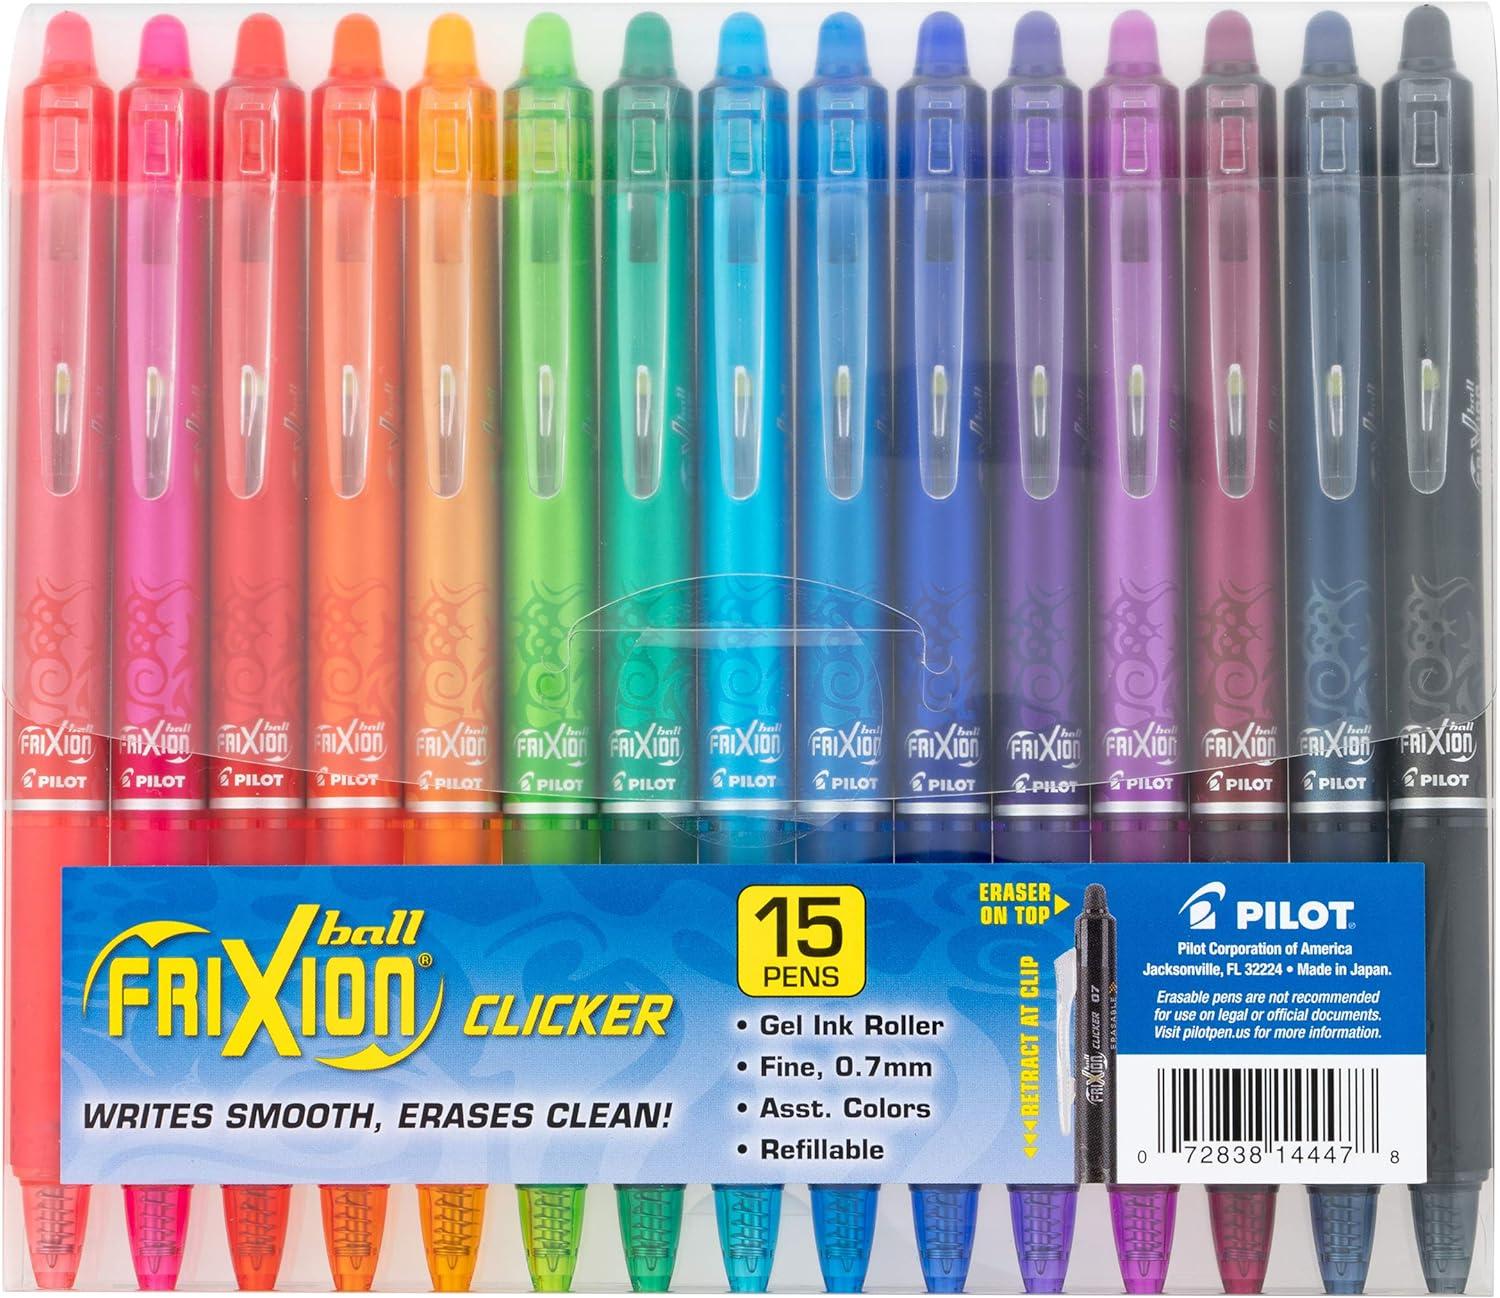 Pilot FriXion Clicker Erasable Gel Pens 15-Pack for $17.67